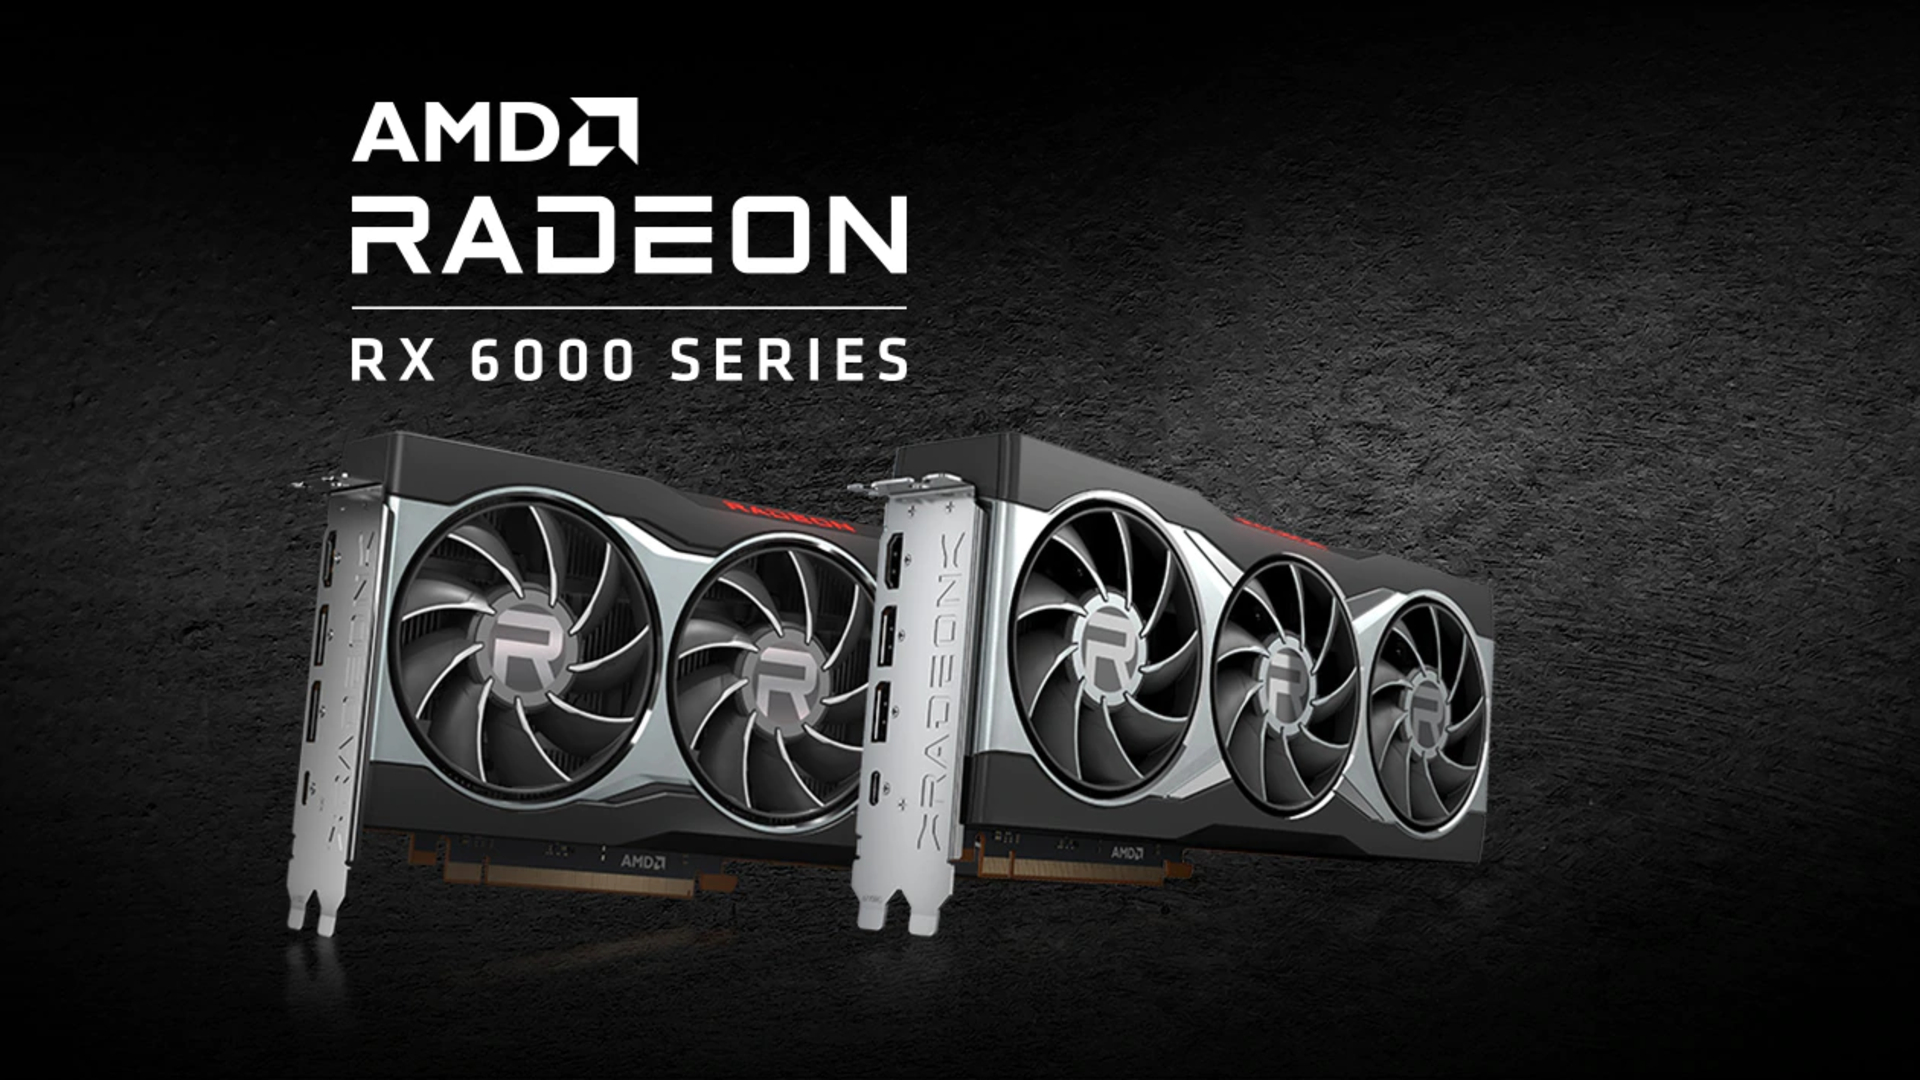 AMD Radeon RX 6000 series GPUs on grey background